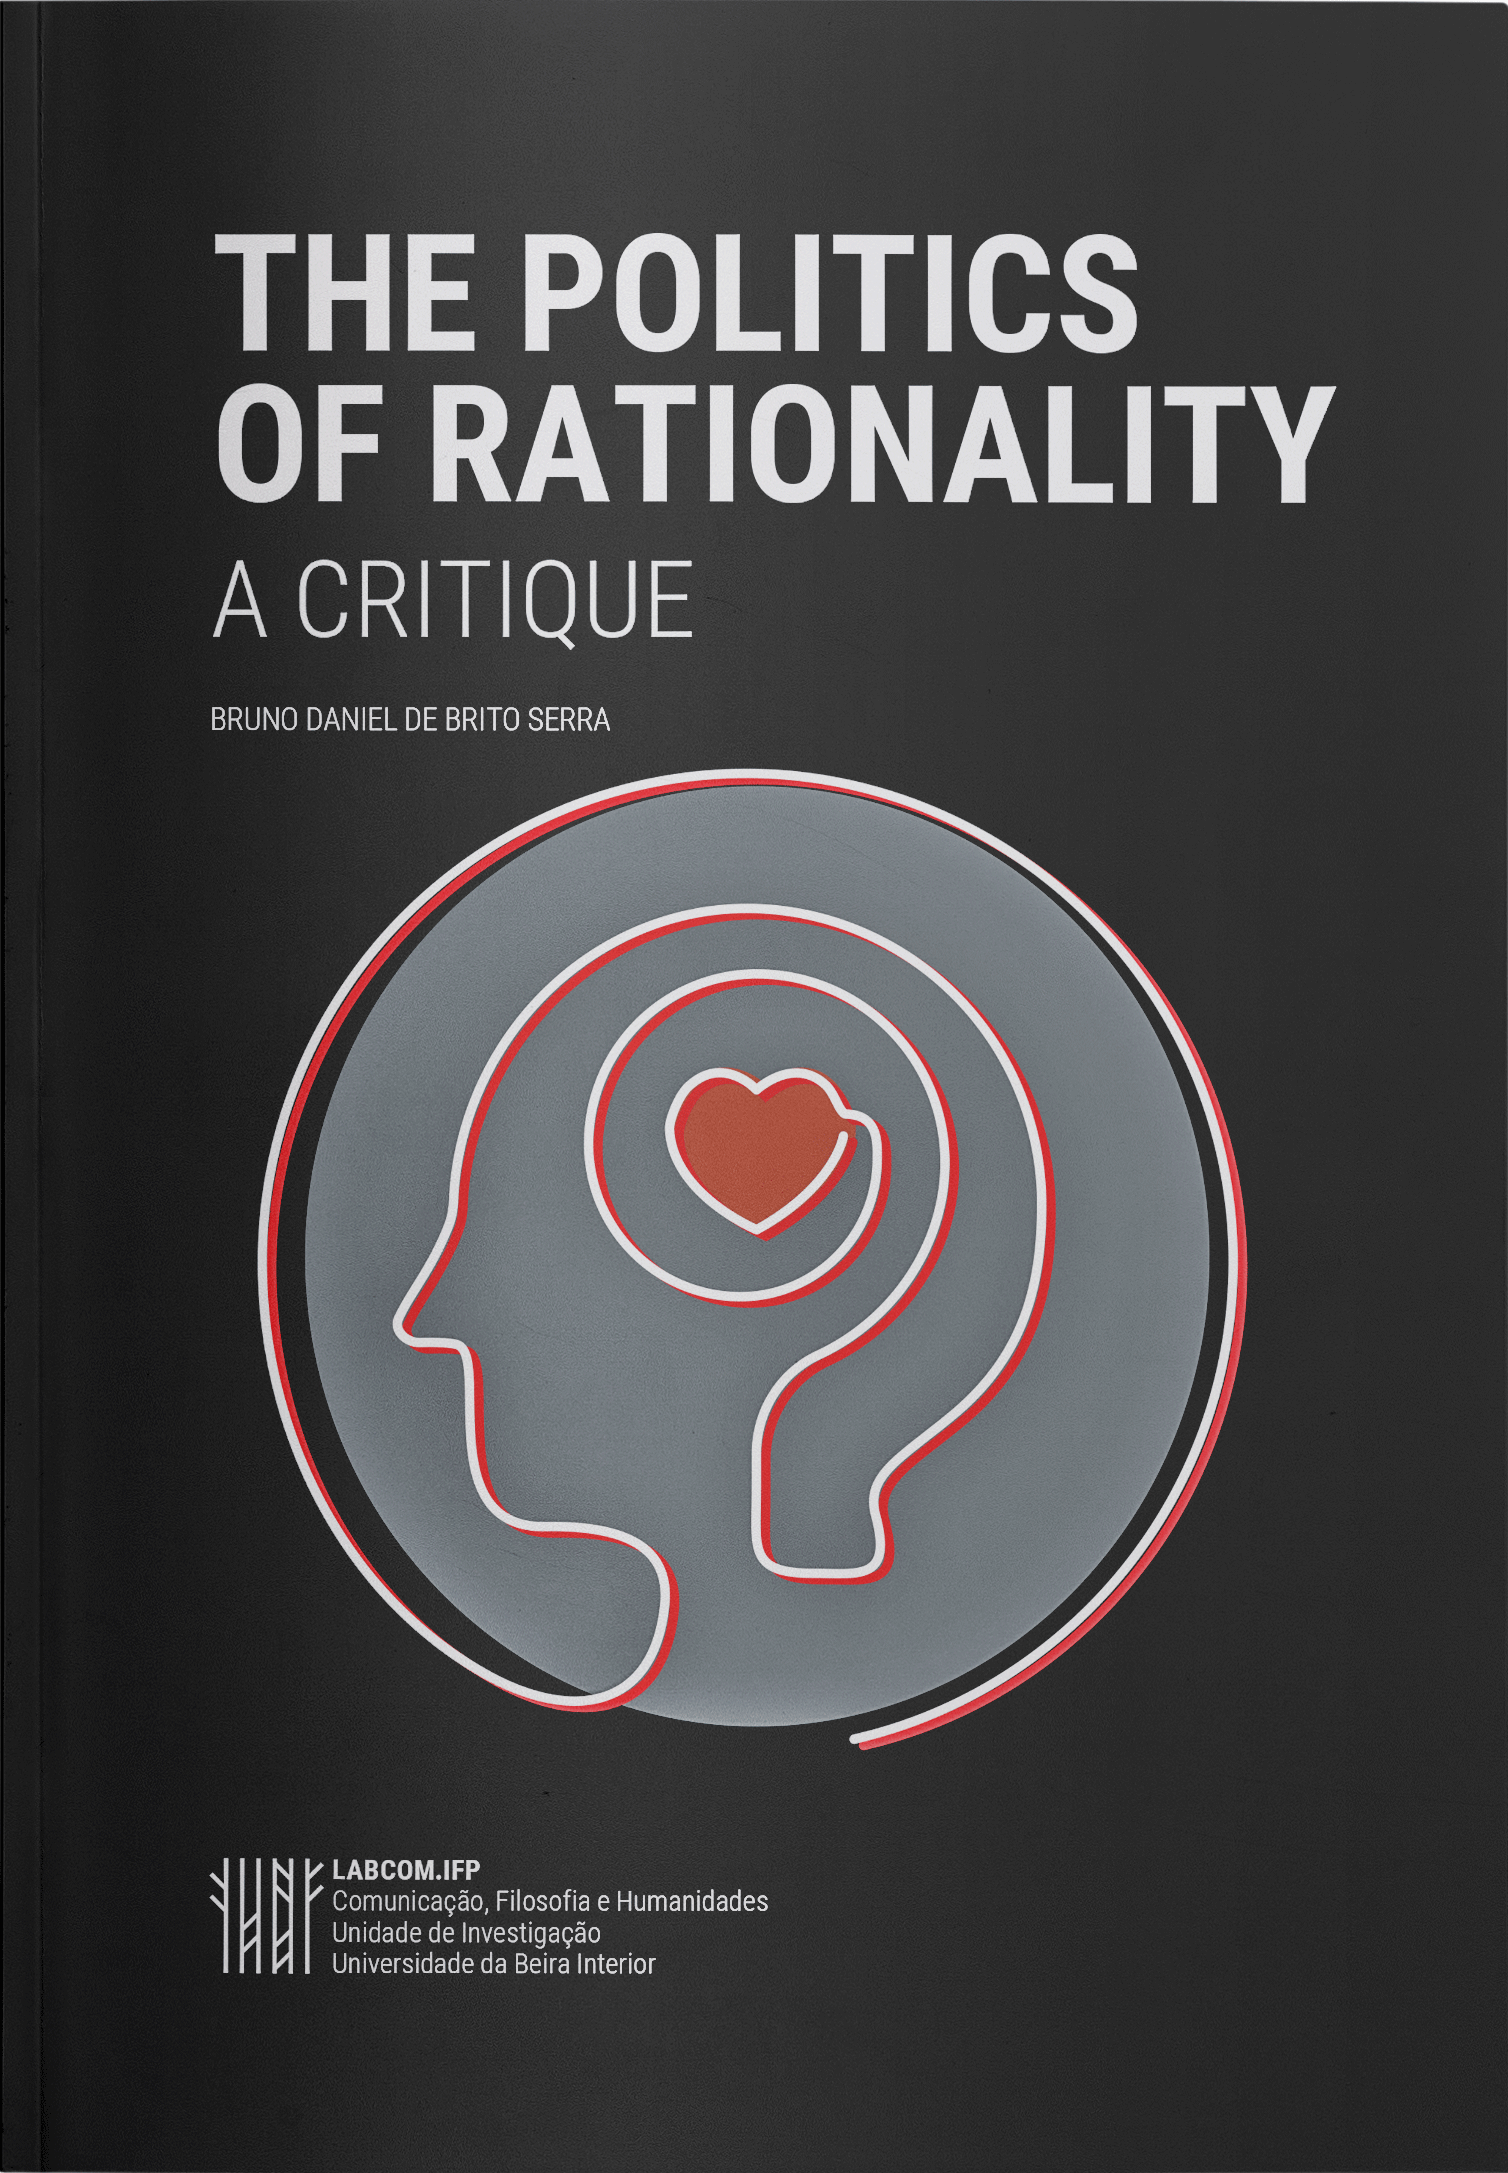 Capa: Bruno Daniel de Brito Serra (2019) The Politics of Rationality: A critique. Communication  +  Philosophy  +  Humanities. .